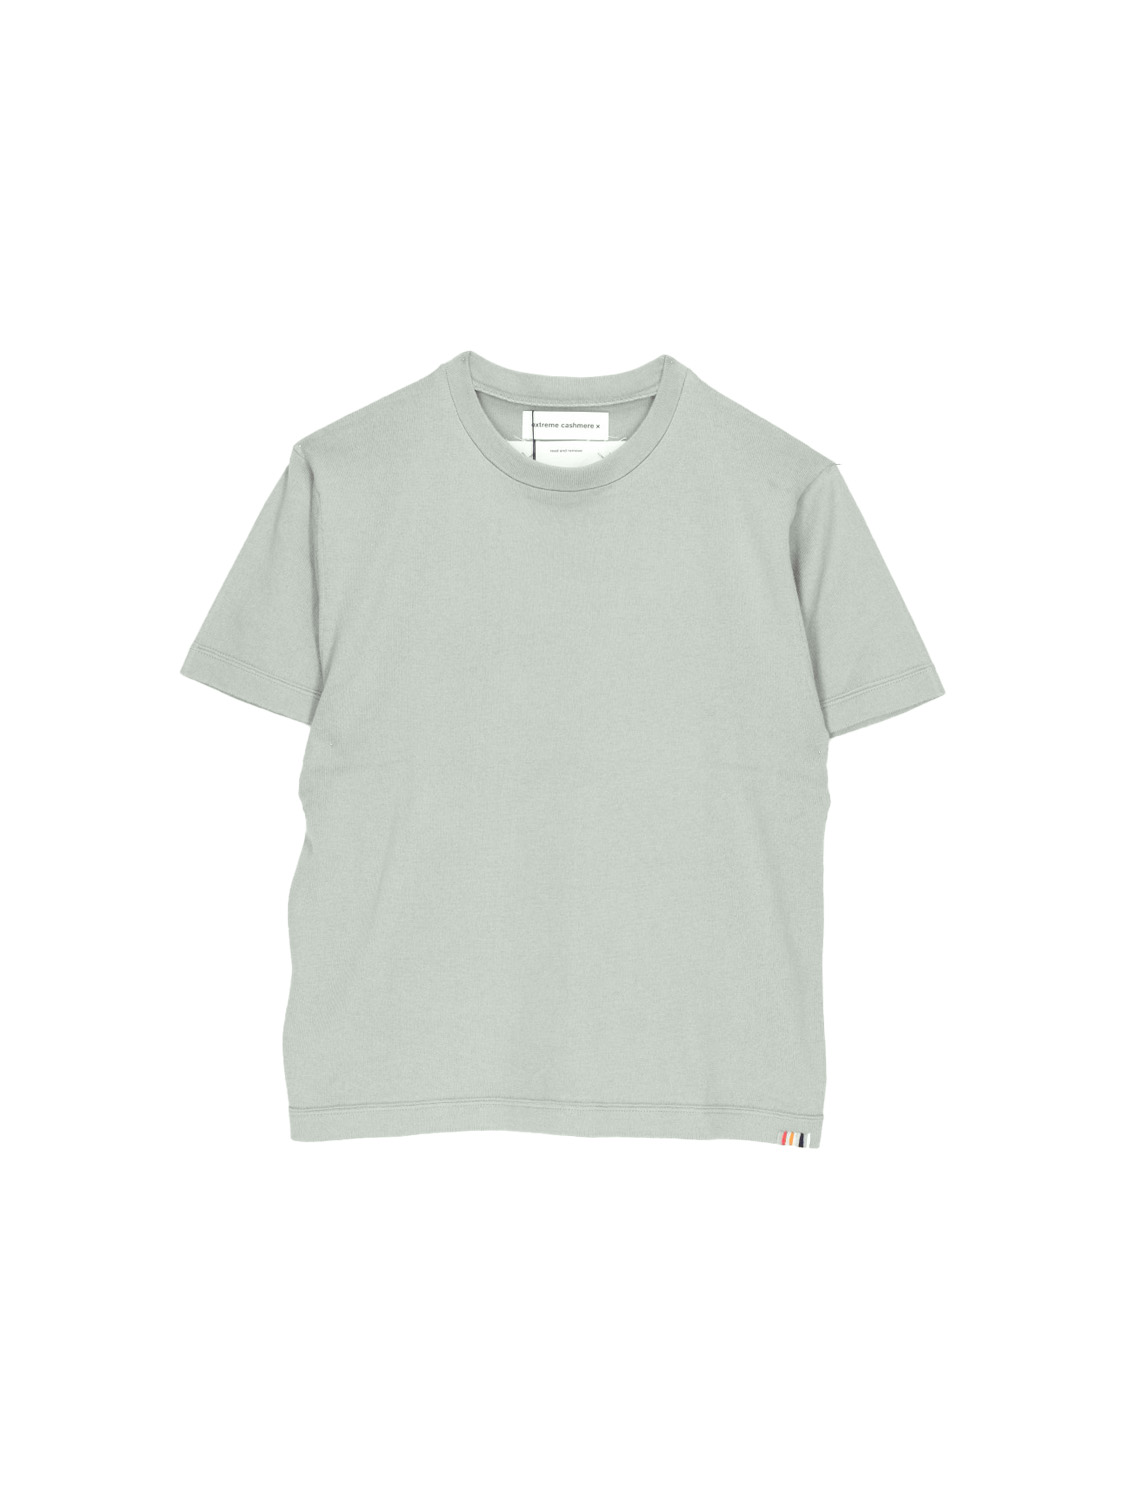 Extreme Cashmere n° 268 Cuba - Camiseta ancha en mezcla de cachemira y algodón -blanco Talla única